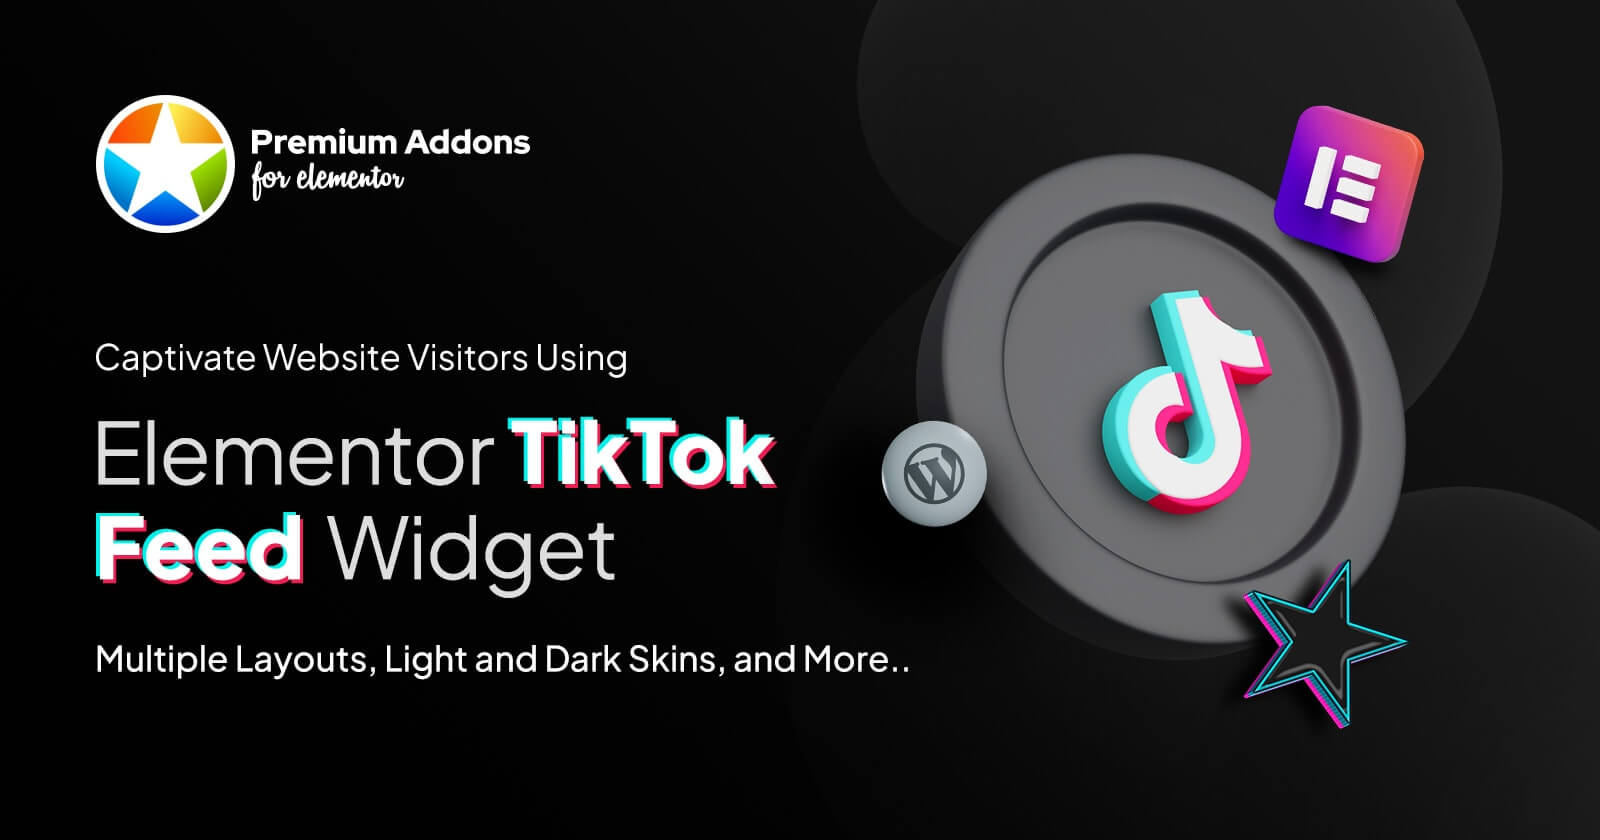 Elementor TikTok Feed widget documentation article image